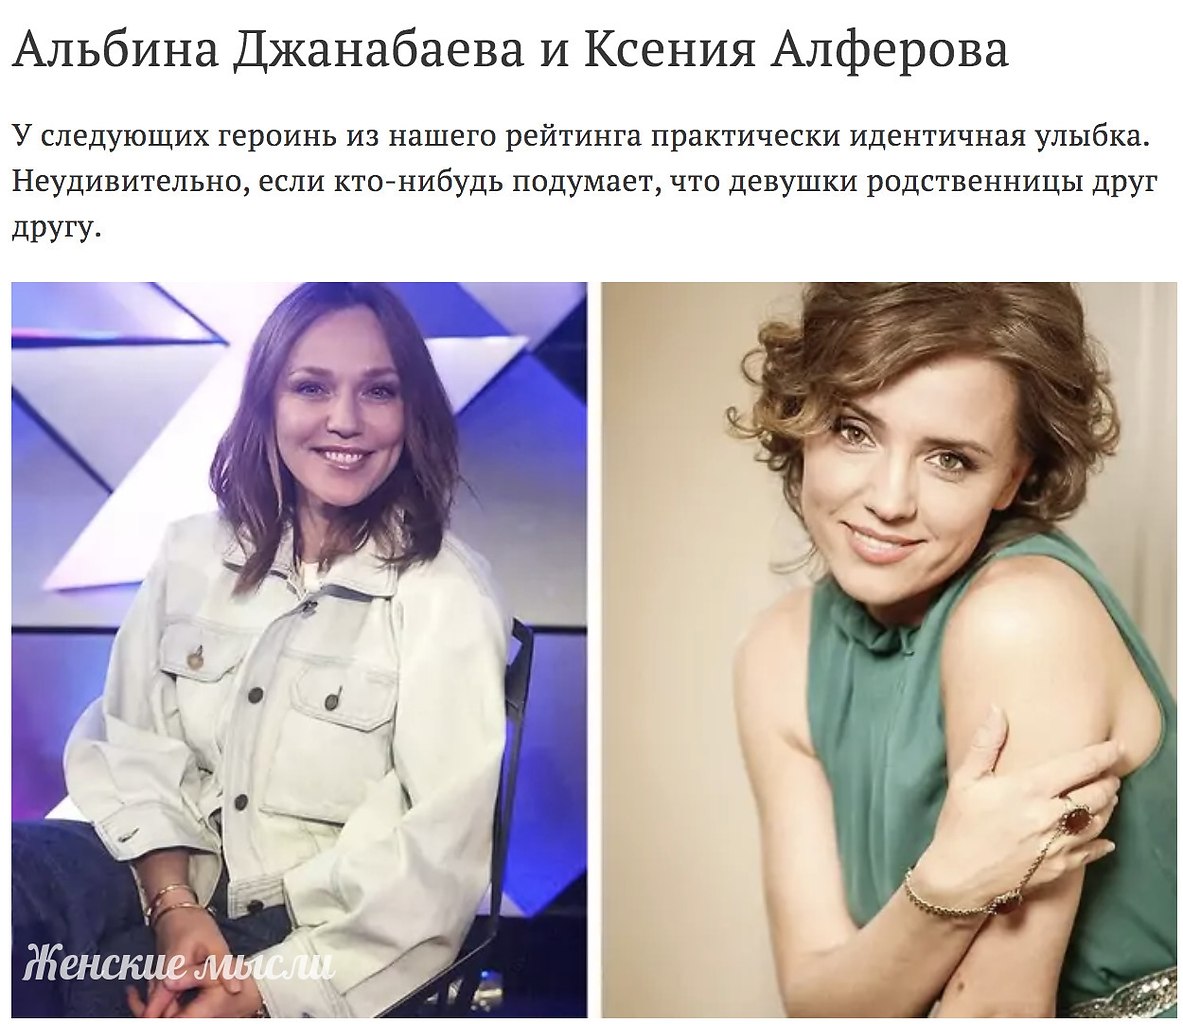 Альбина Джанабаева и Ксения Алферова